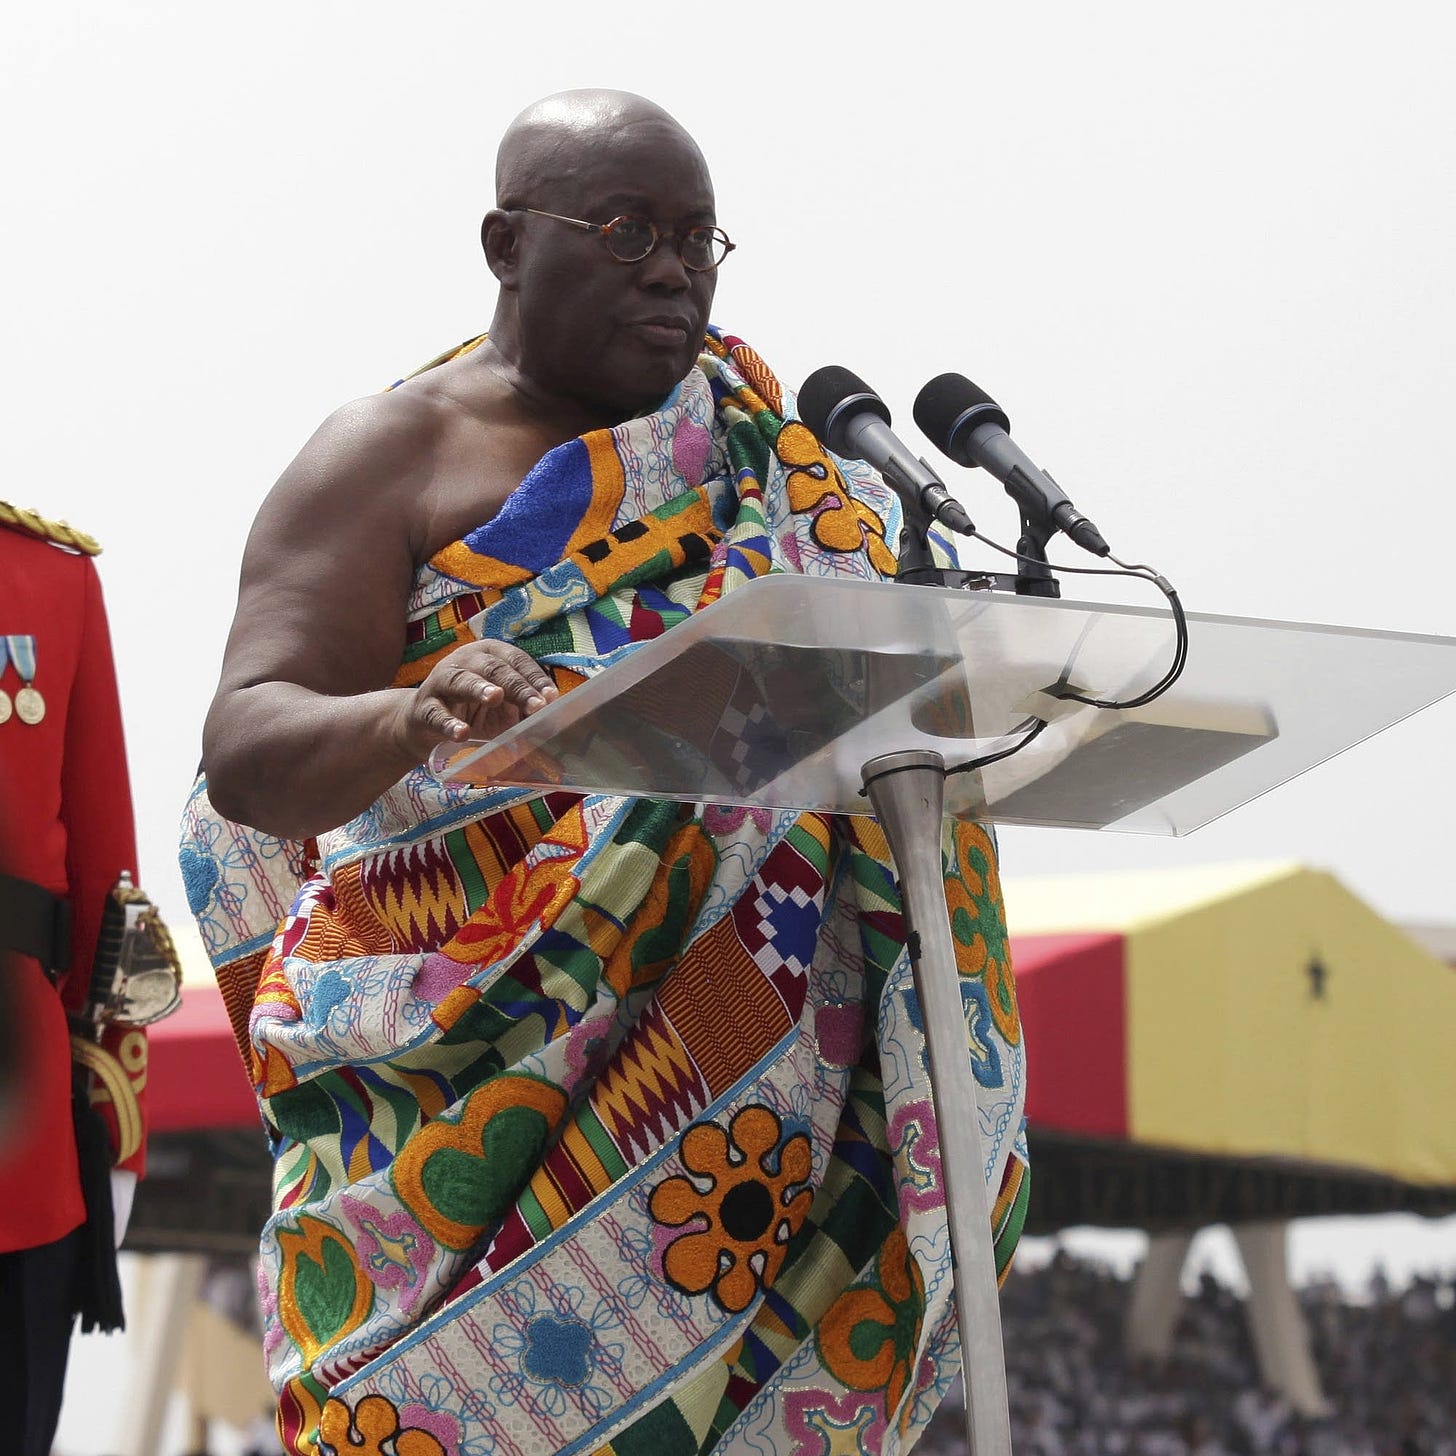 New Ghana president's speech copies Clinton, Bush inaugural addresses | MPR News